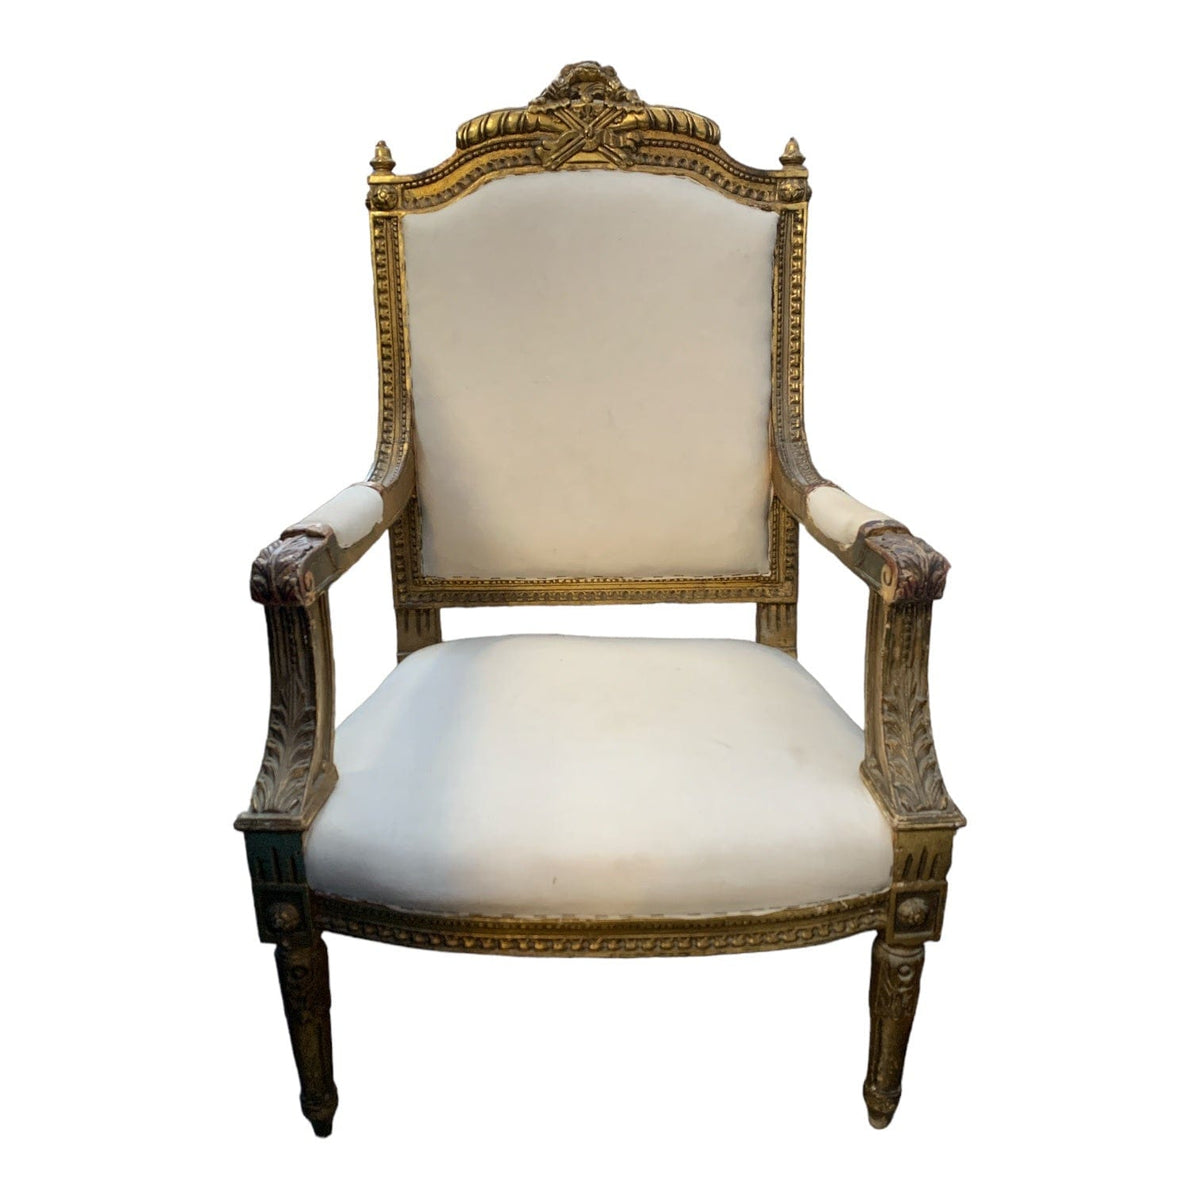 Antique Ornate Chair